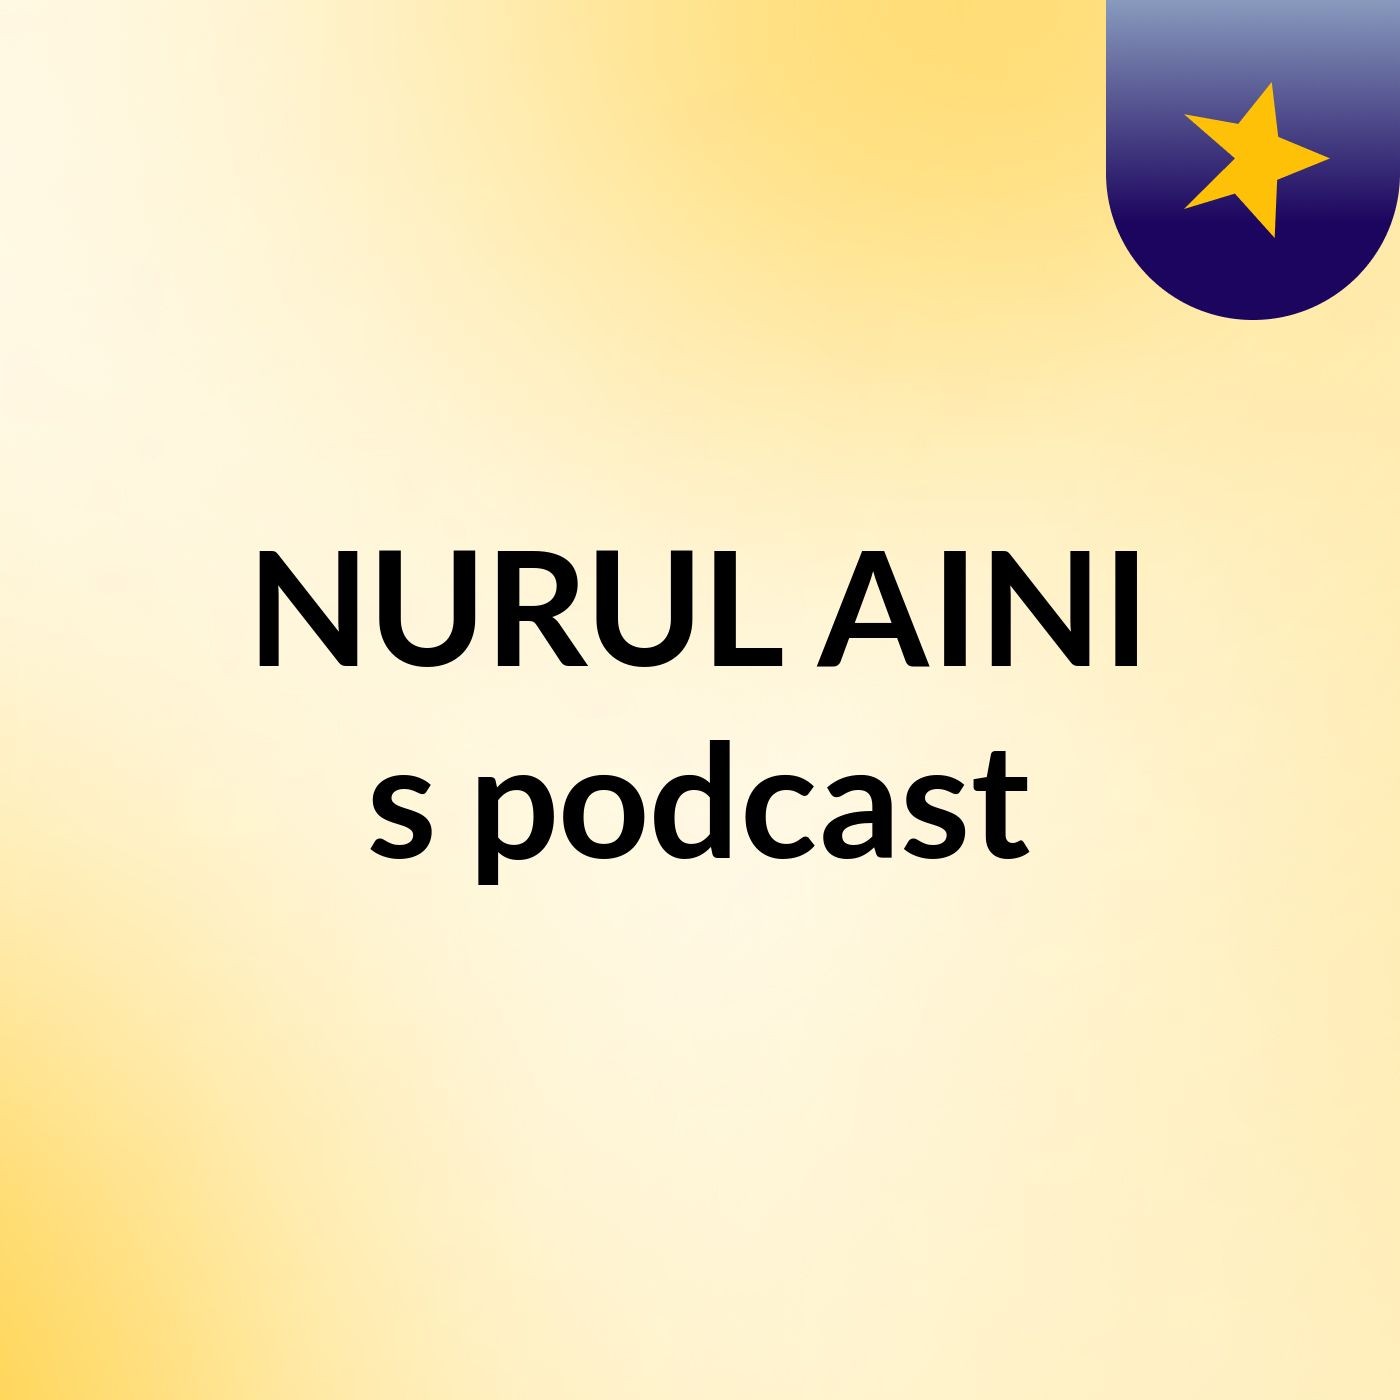 NURUL AINI's podcast